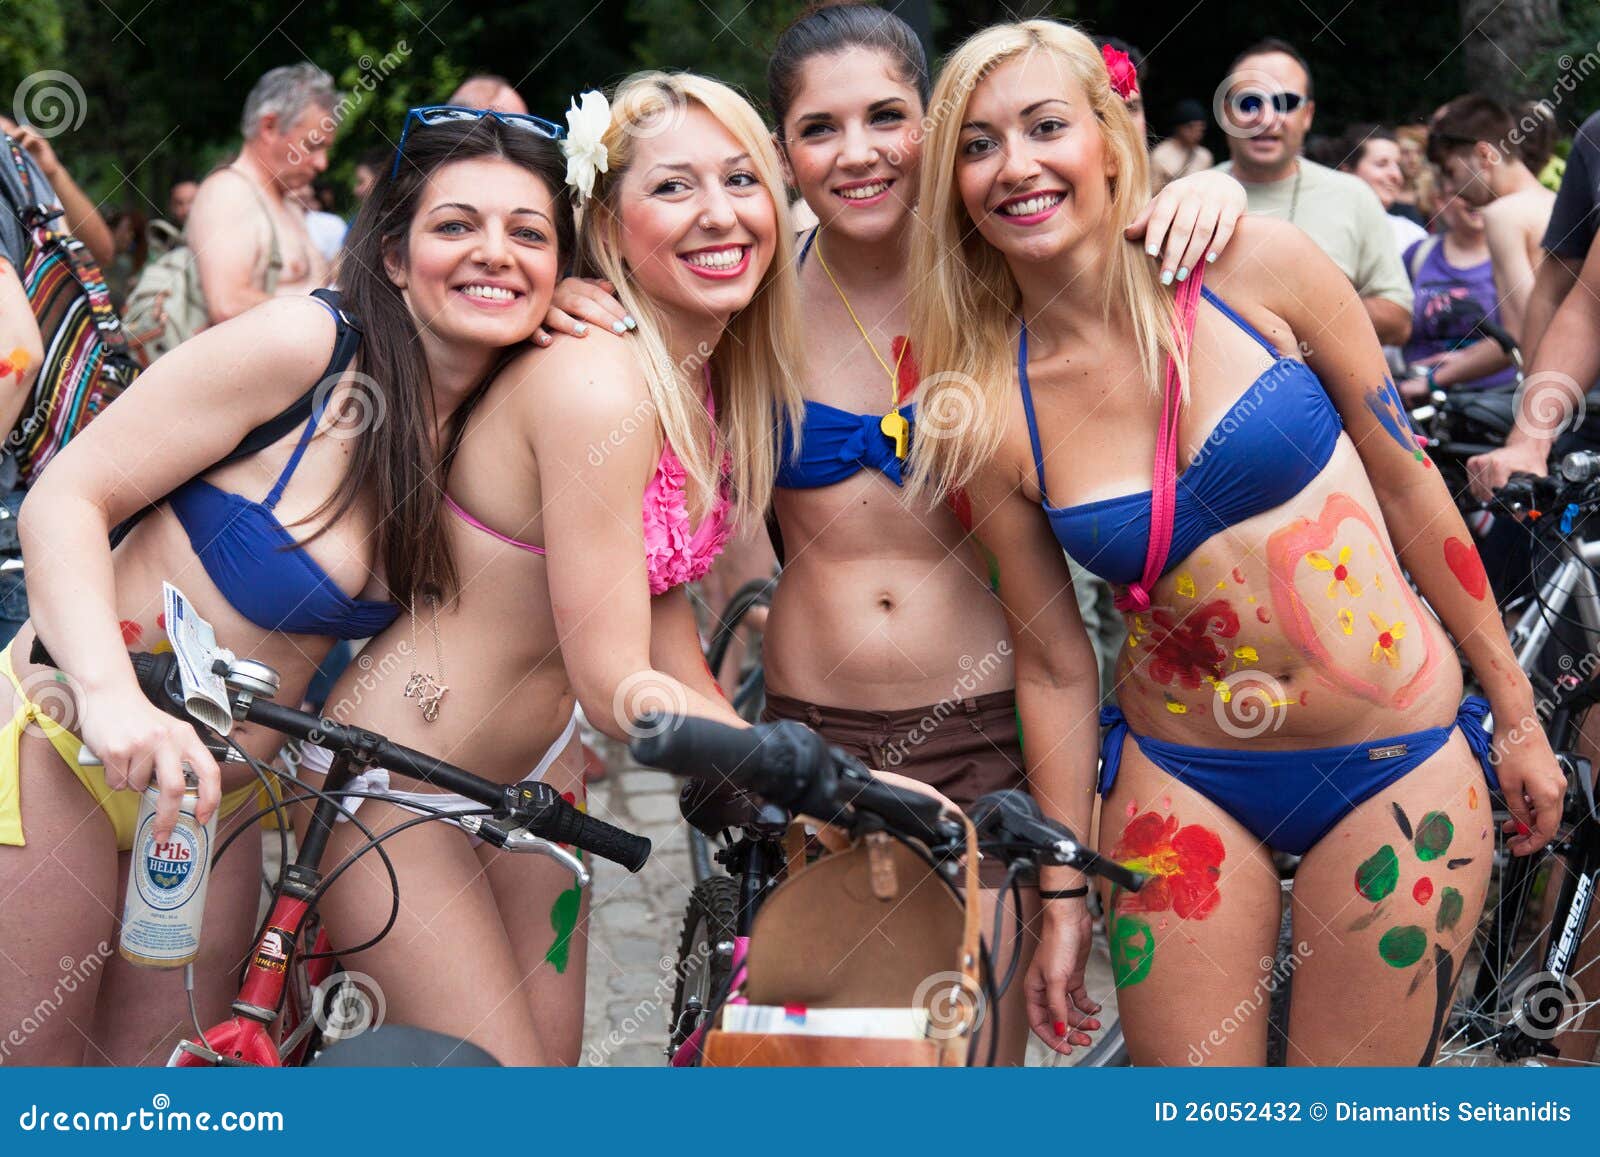 dawn chase add women riding bikes naked photo